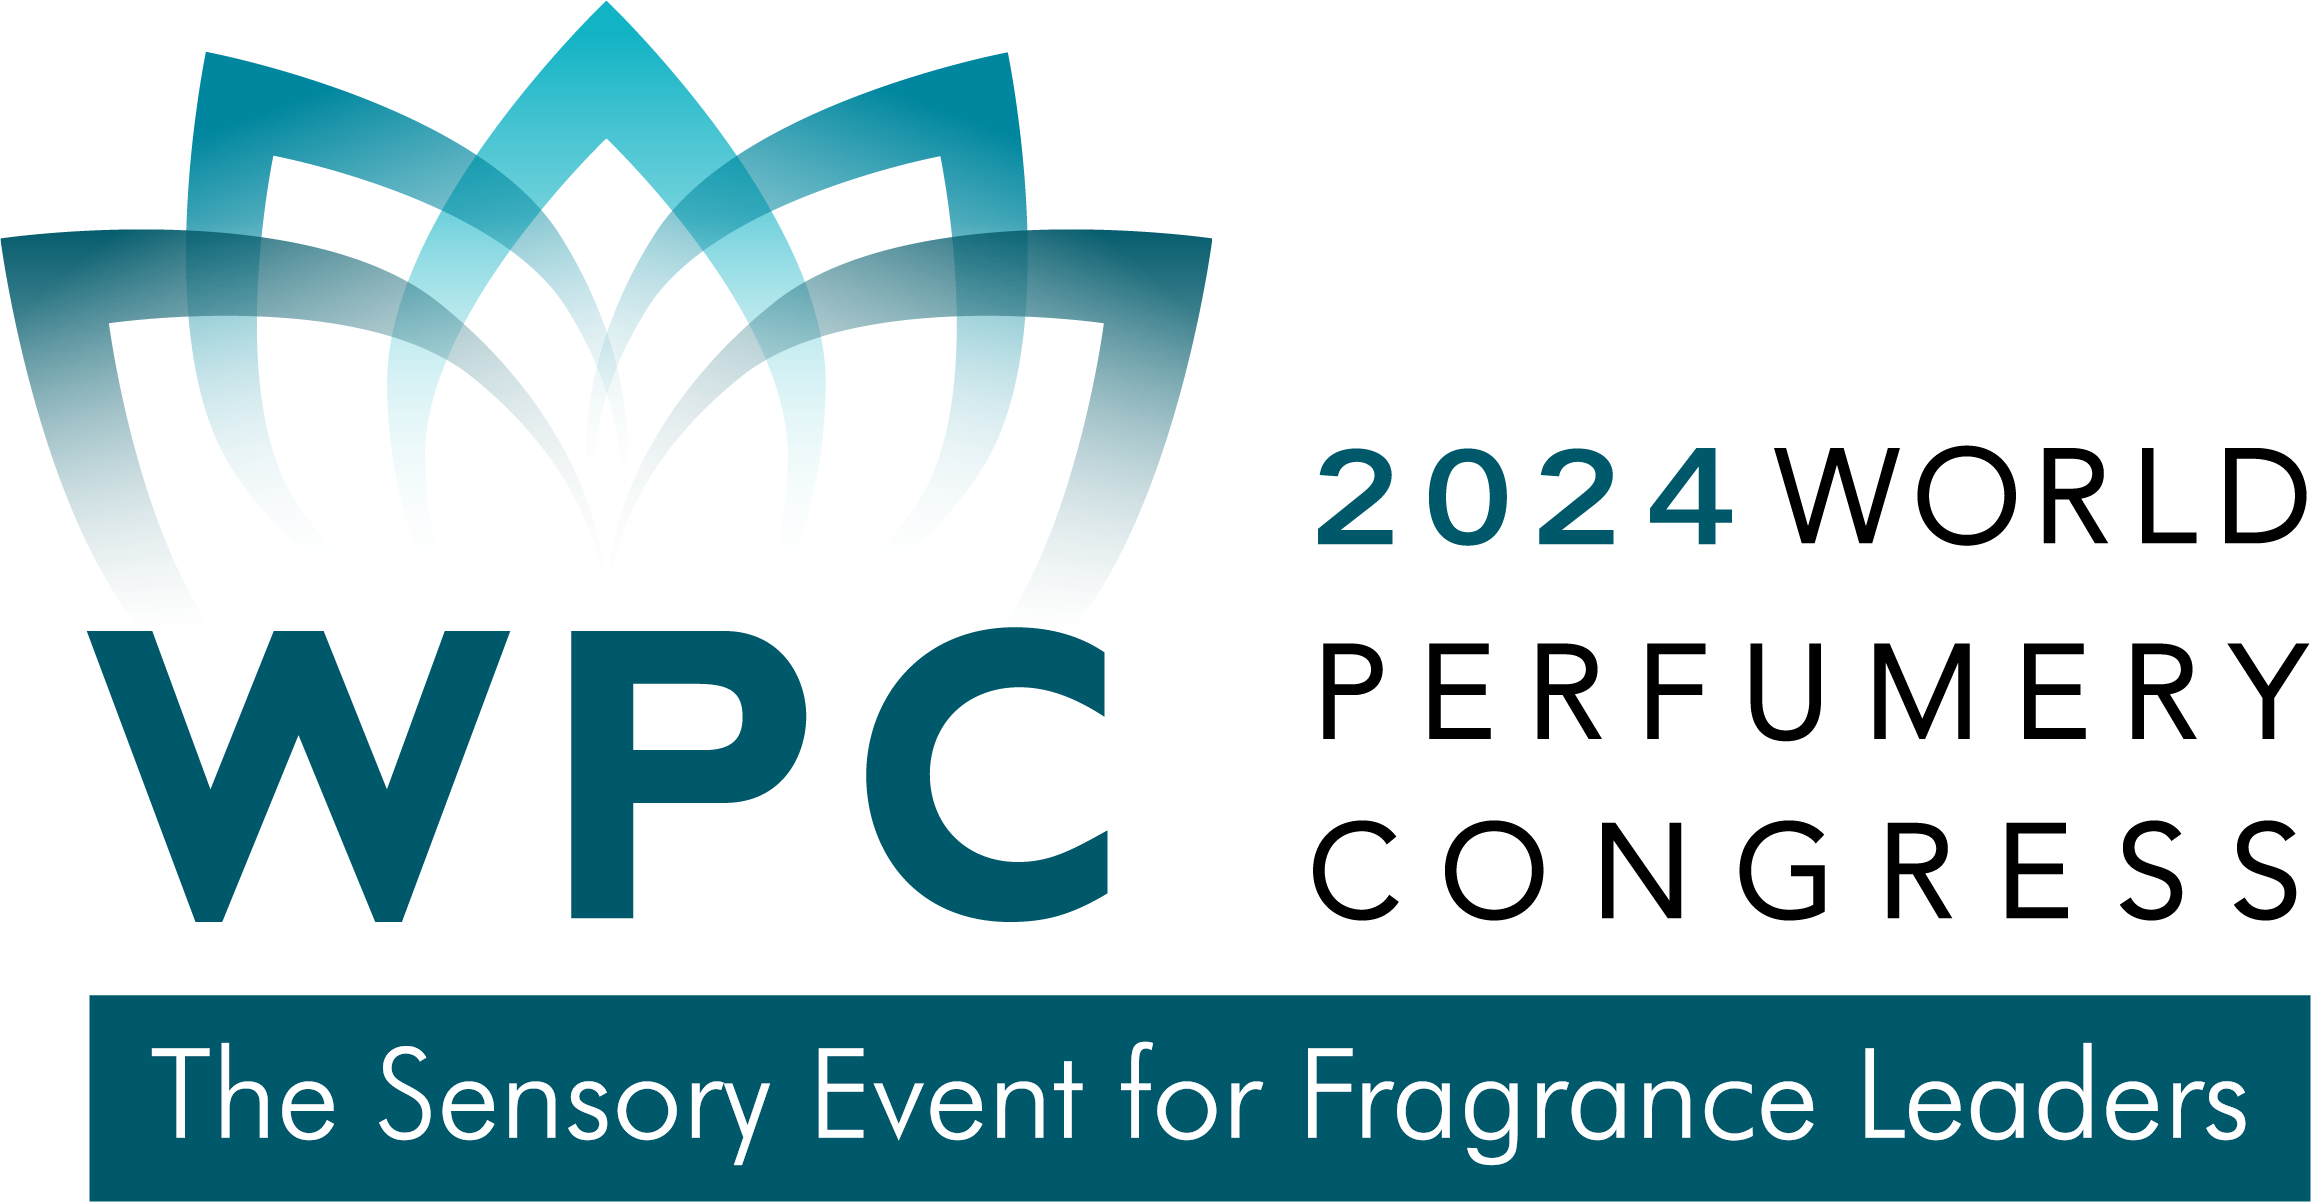 World Perfumery Congress